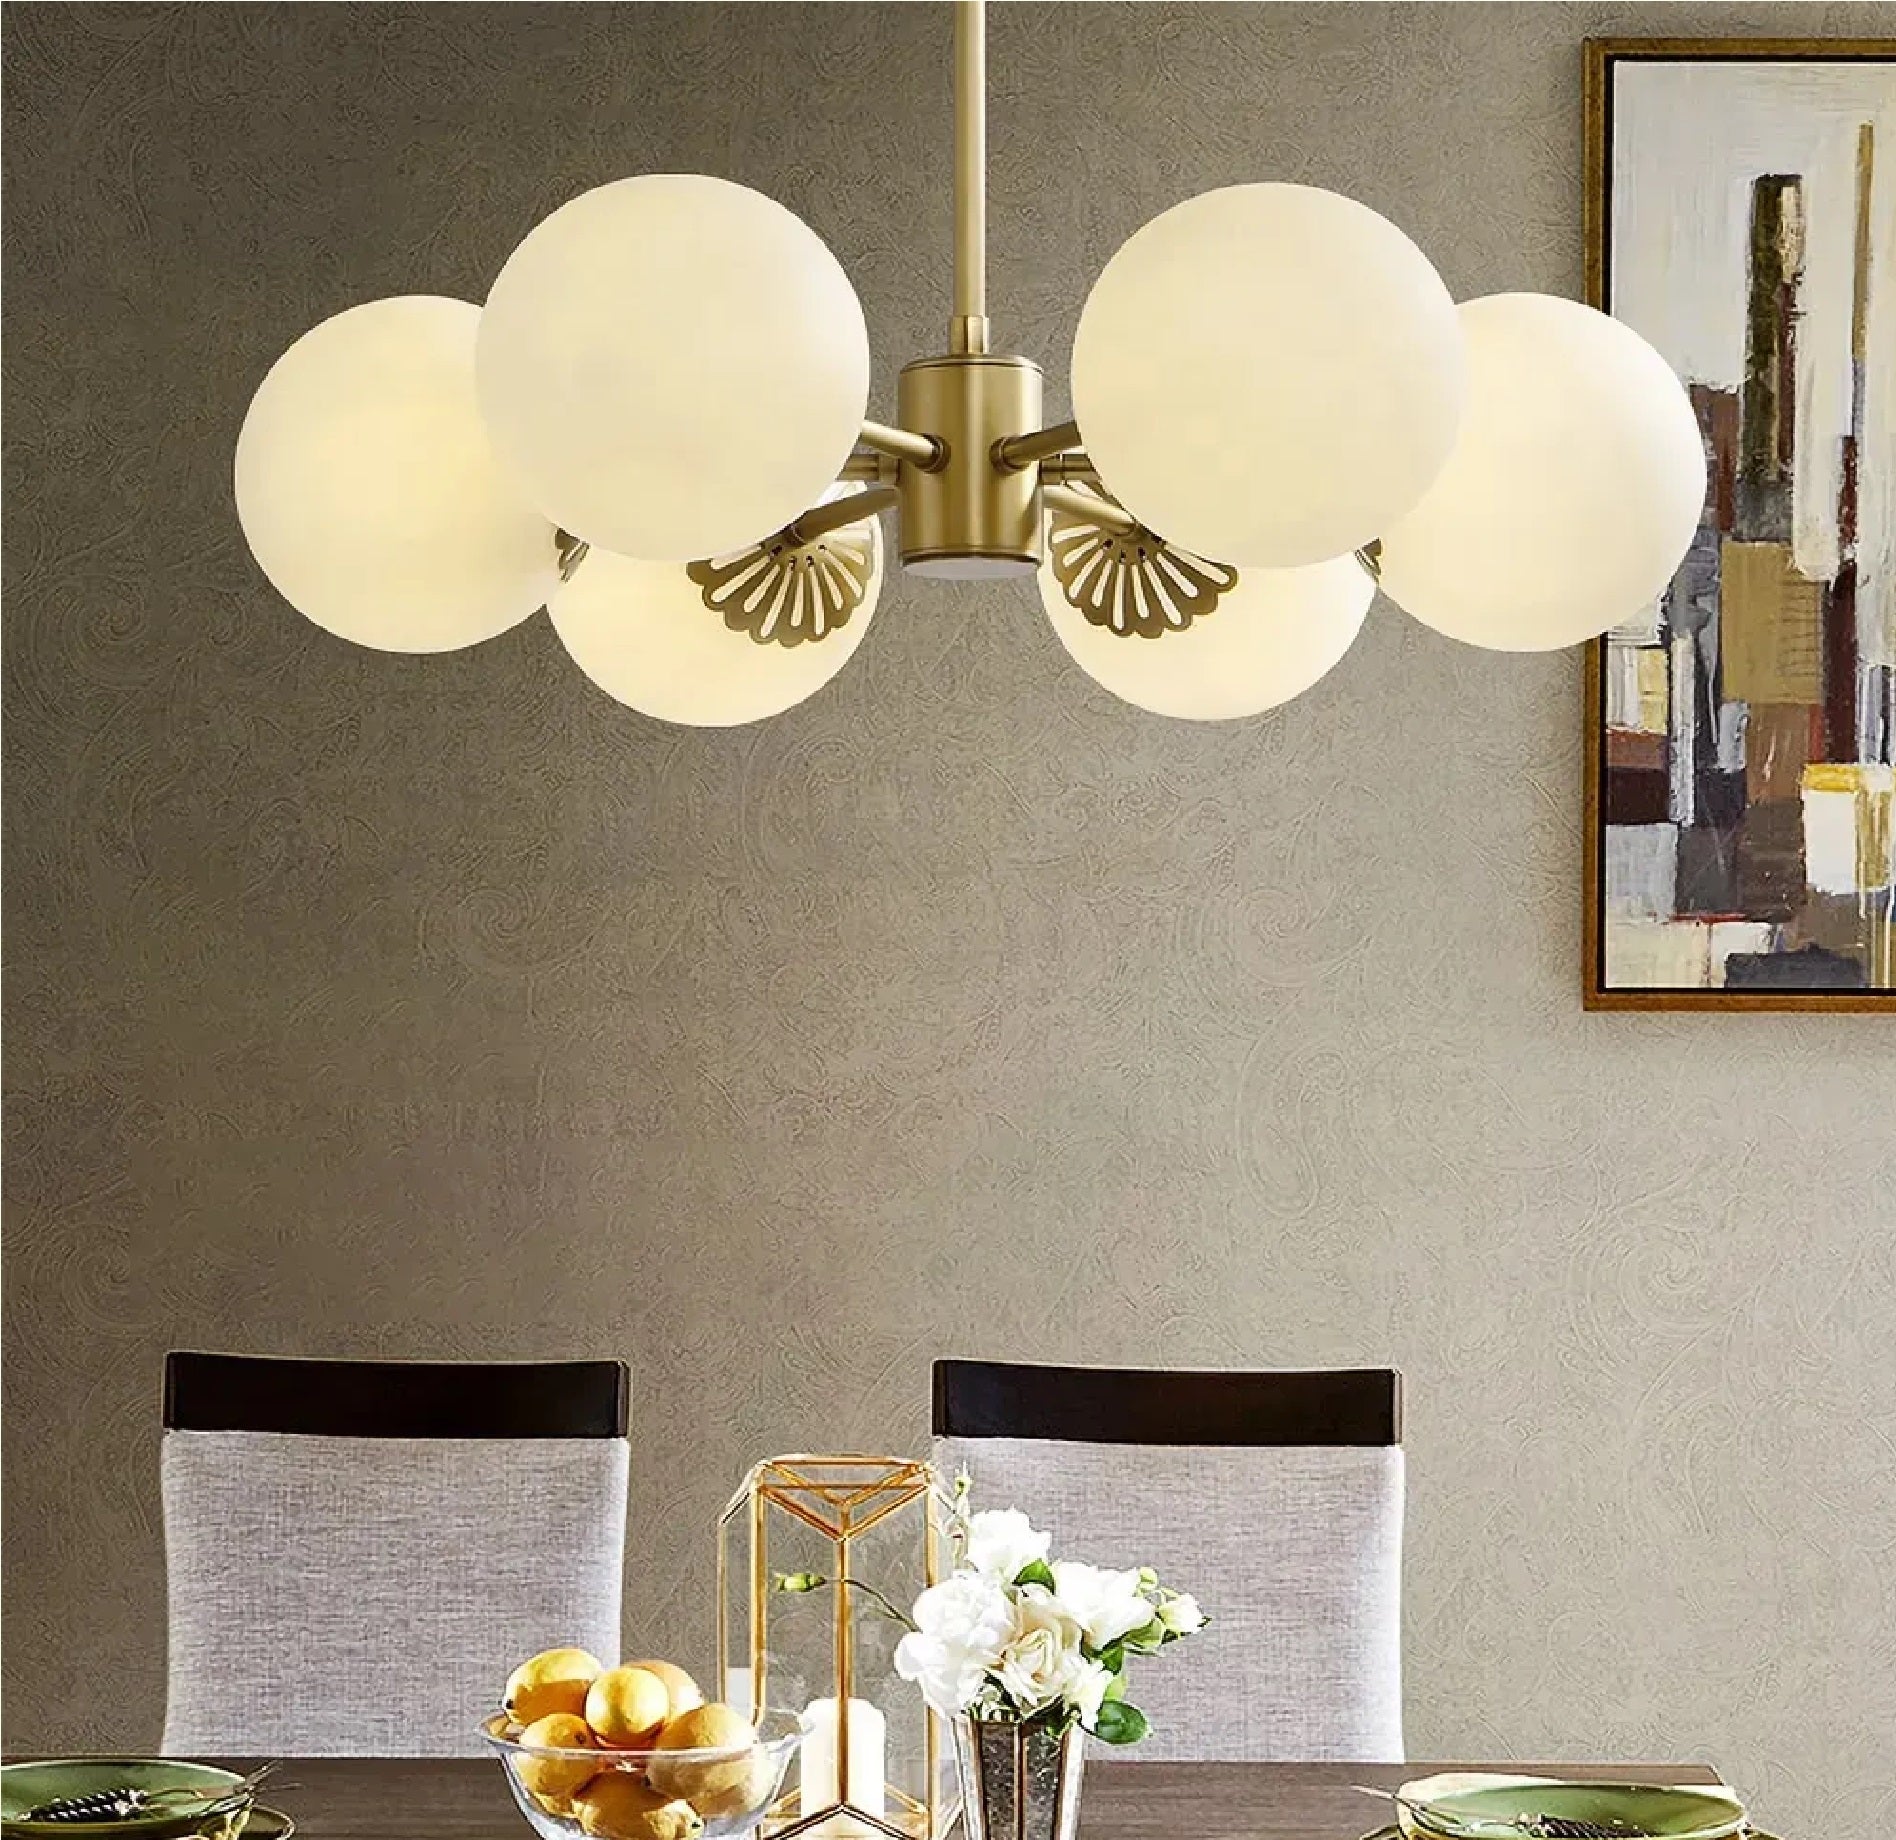 Cloud Glass 6-Light Chandelier - Modern  Industrial Design - Dining Room